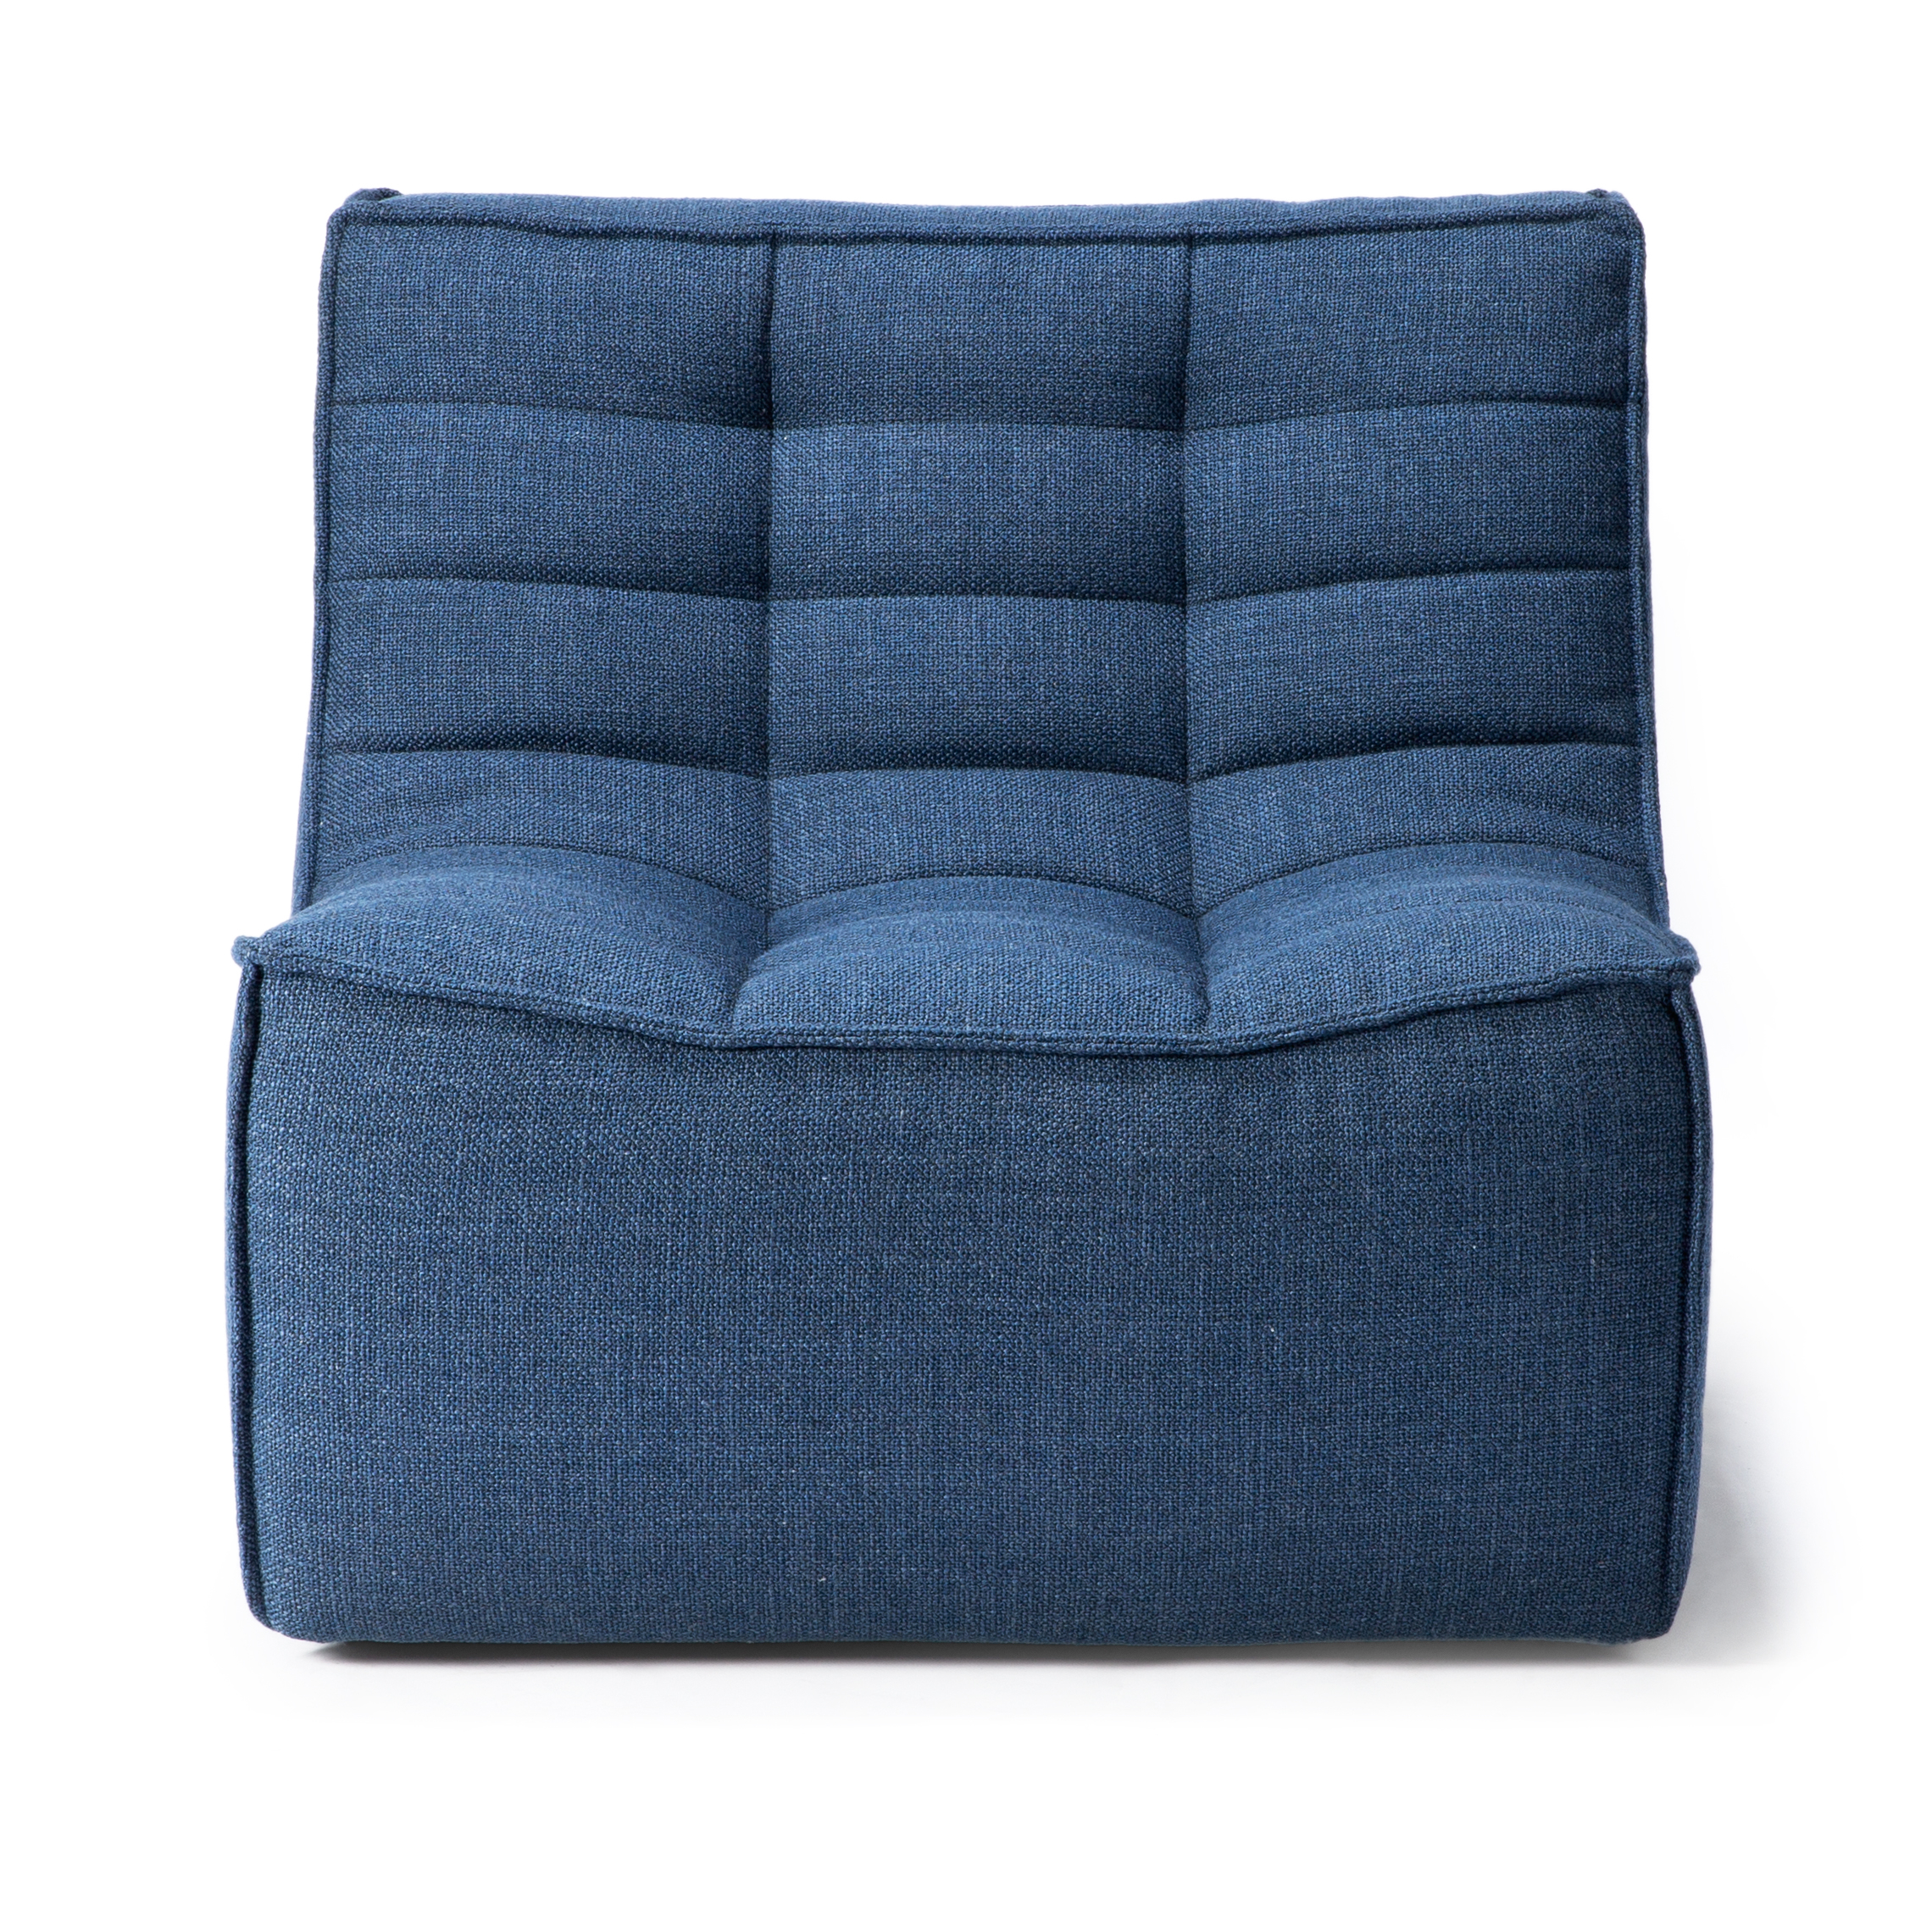 N701 1-Seater Upholstered